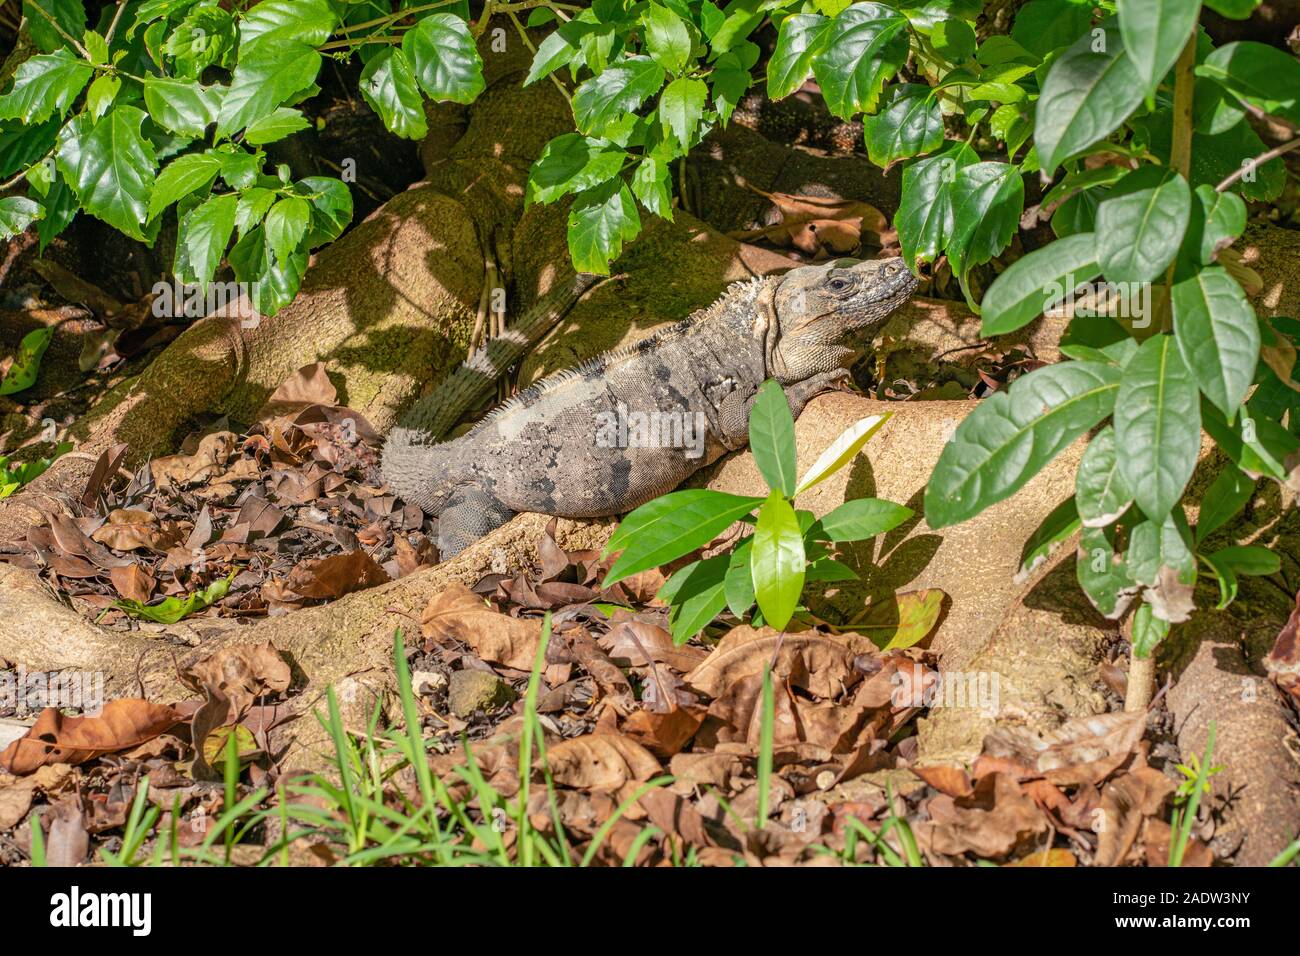 Black Iguana lying in Grass in Mexico Stock Photo